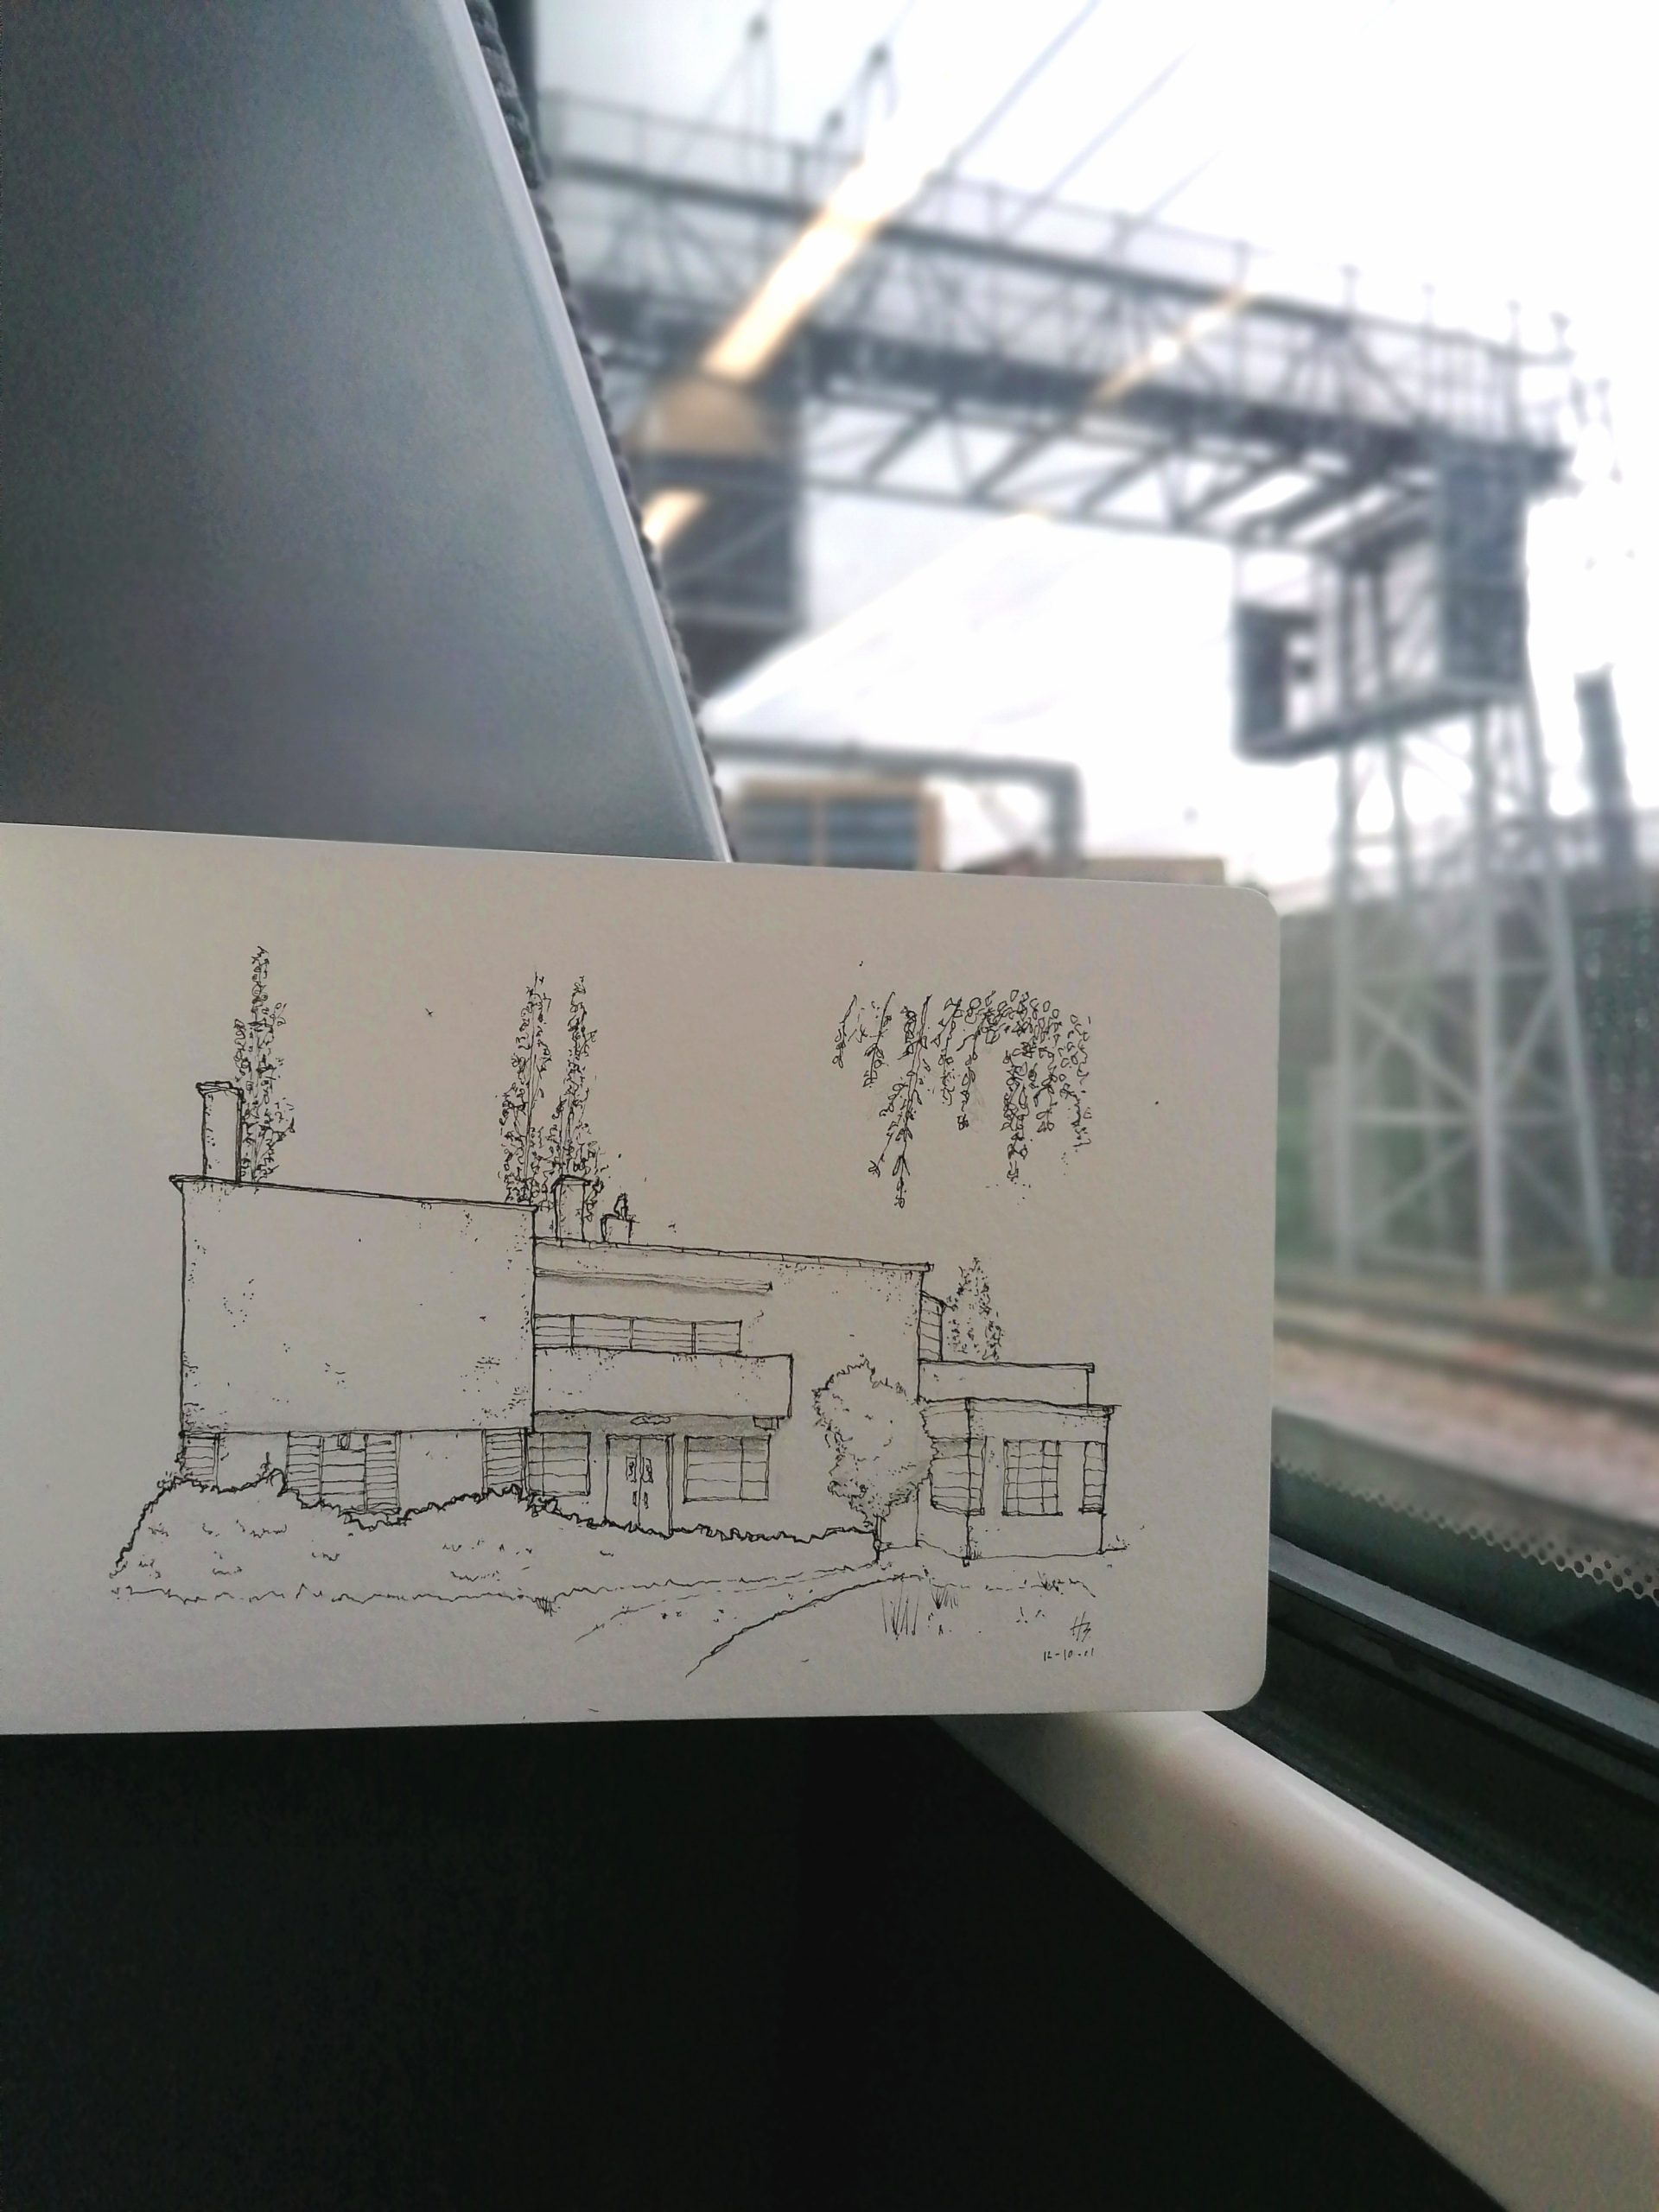 Sketch on a train No. 3